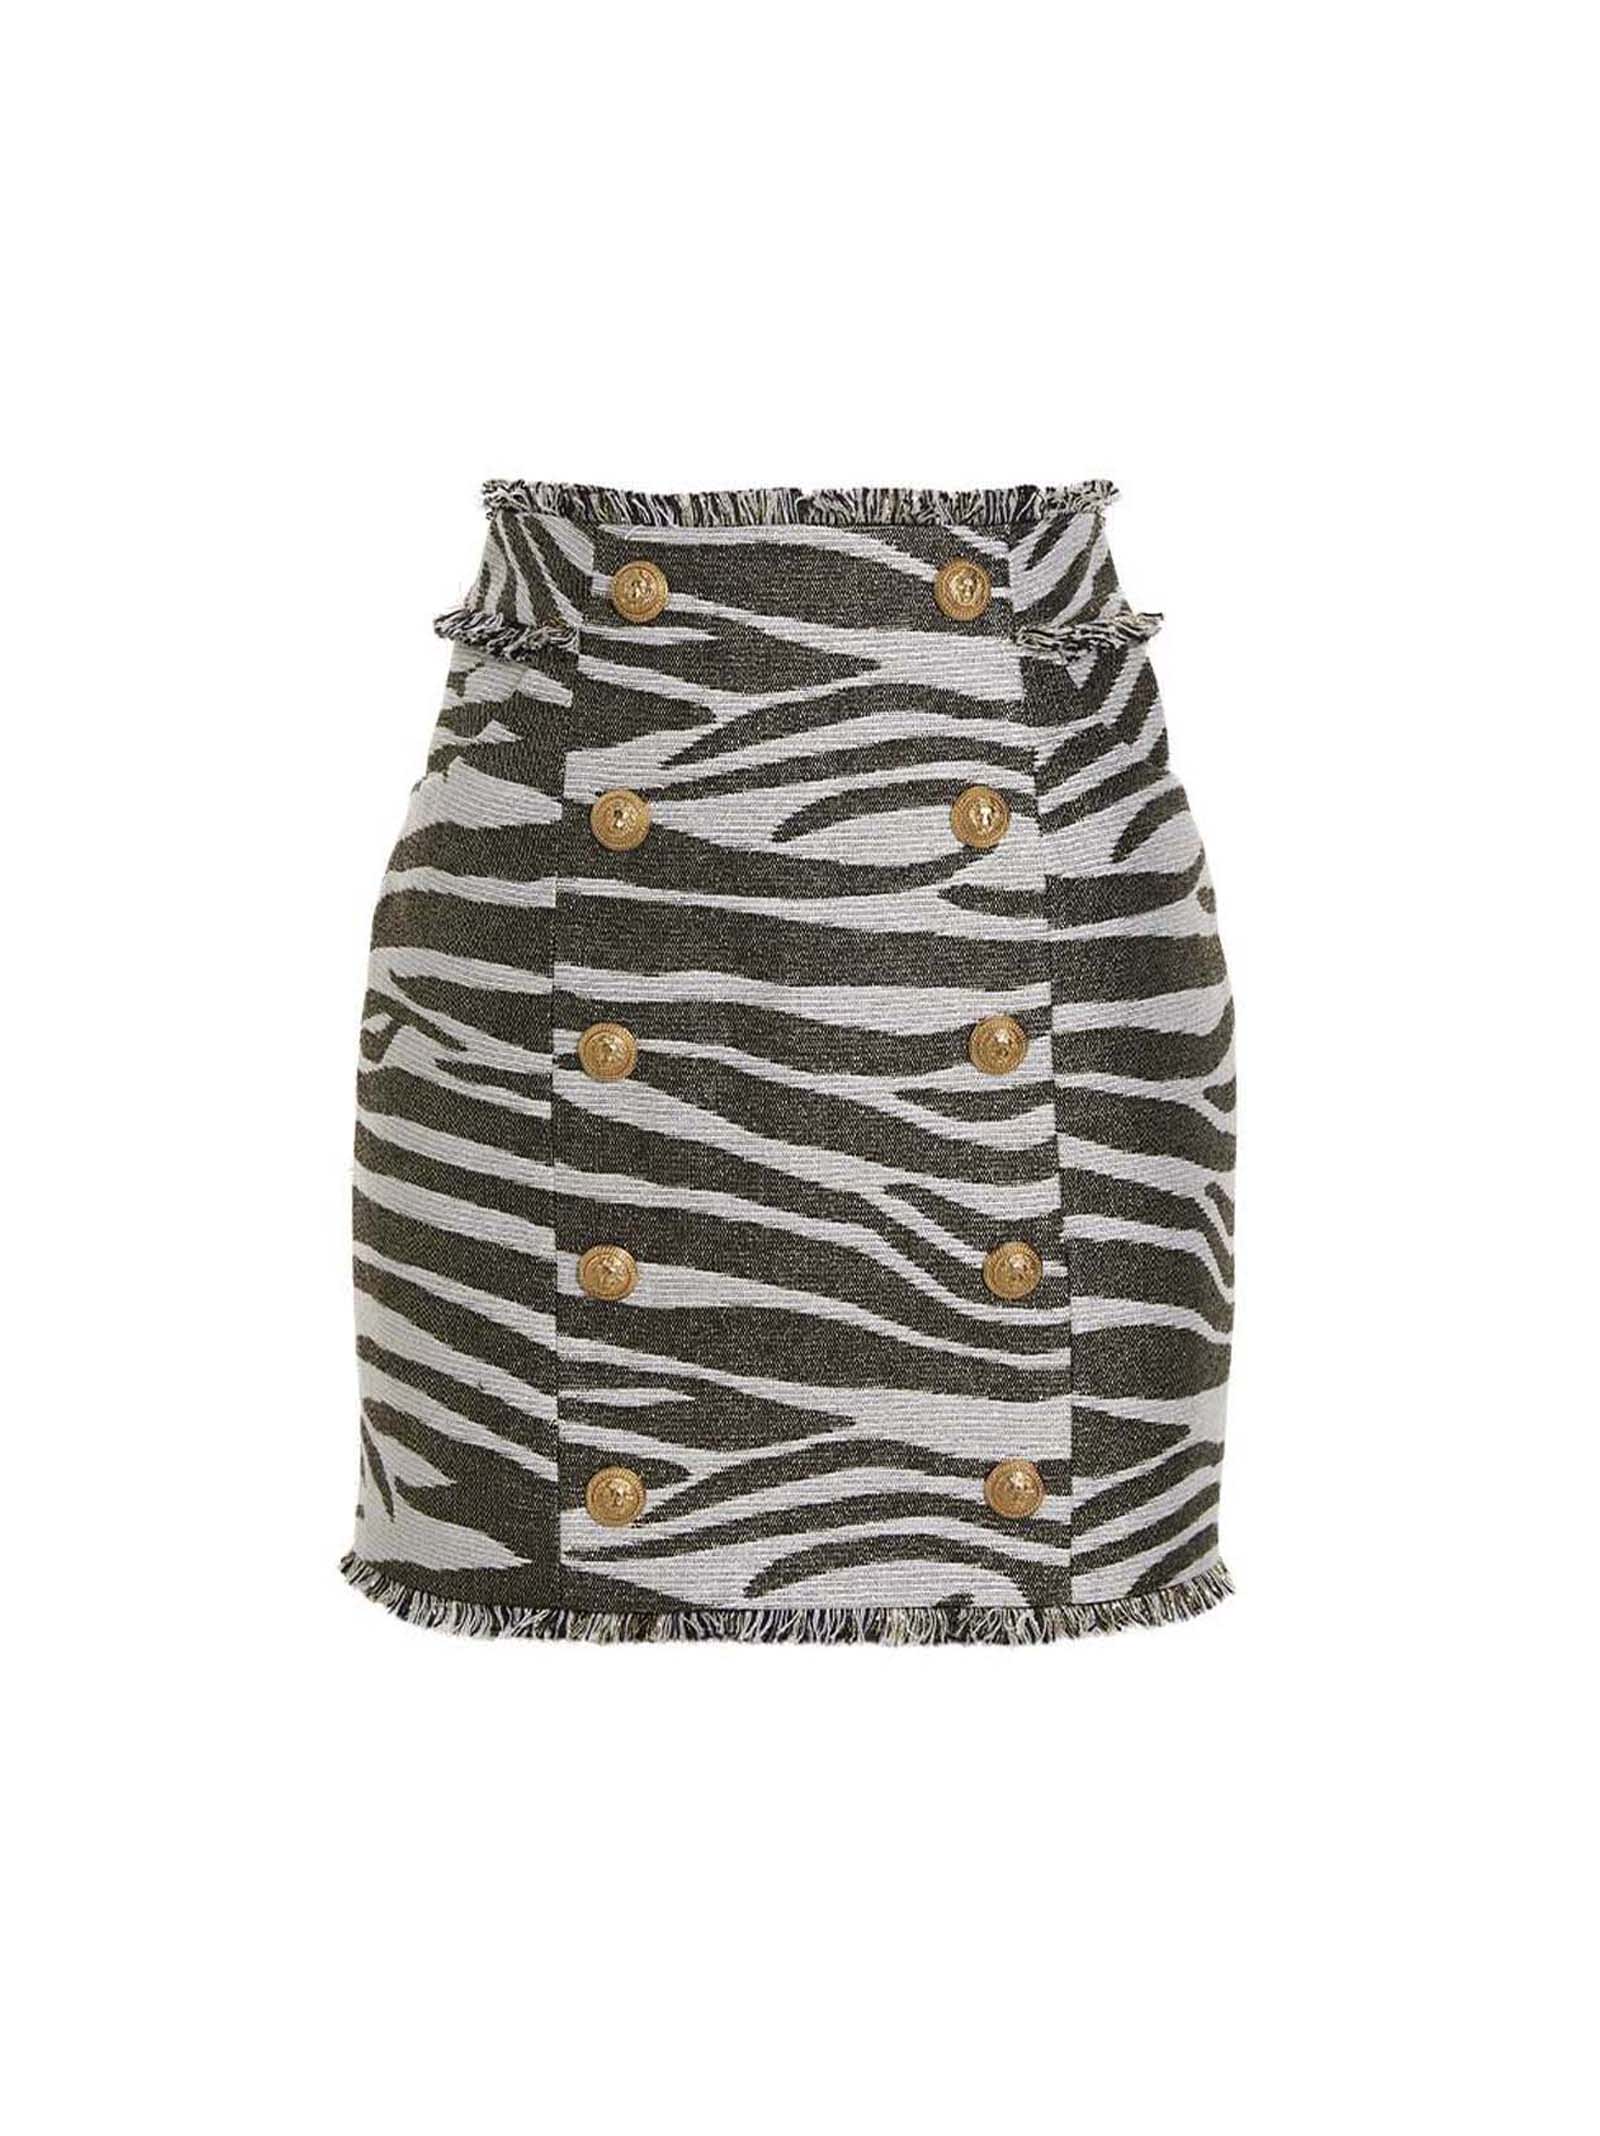 Balmain lurex Zebra Skirt